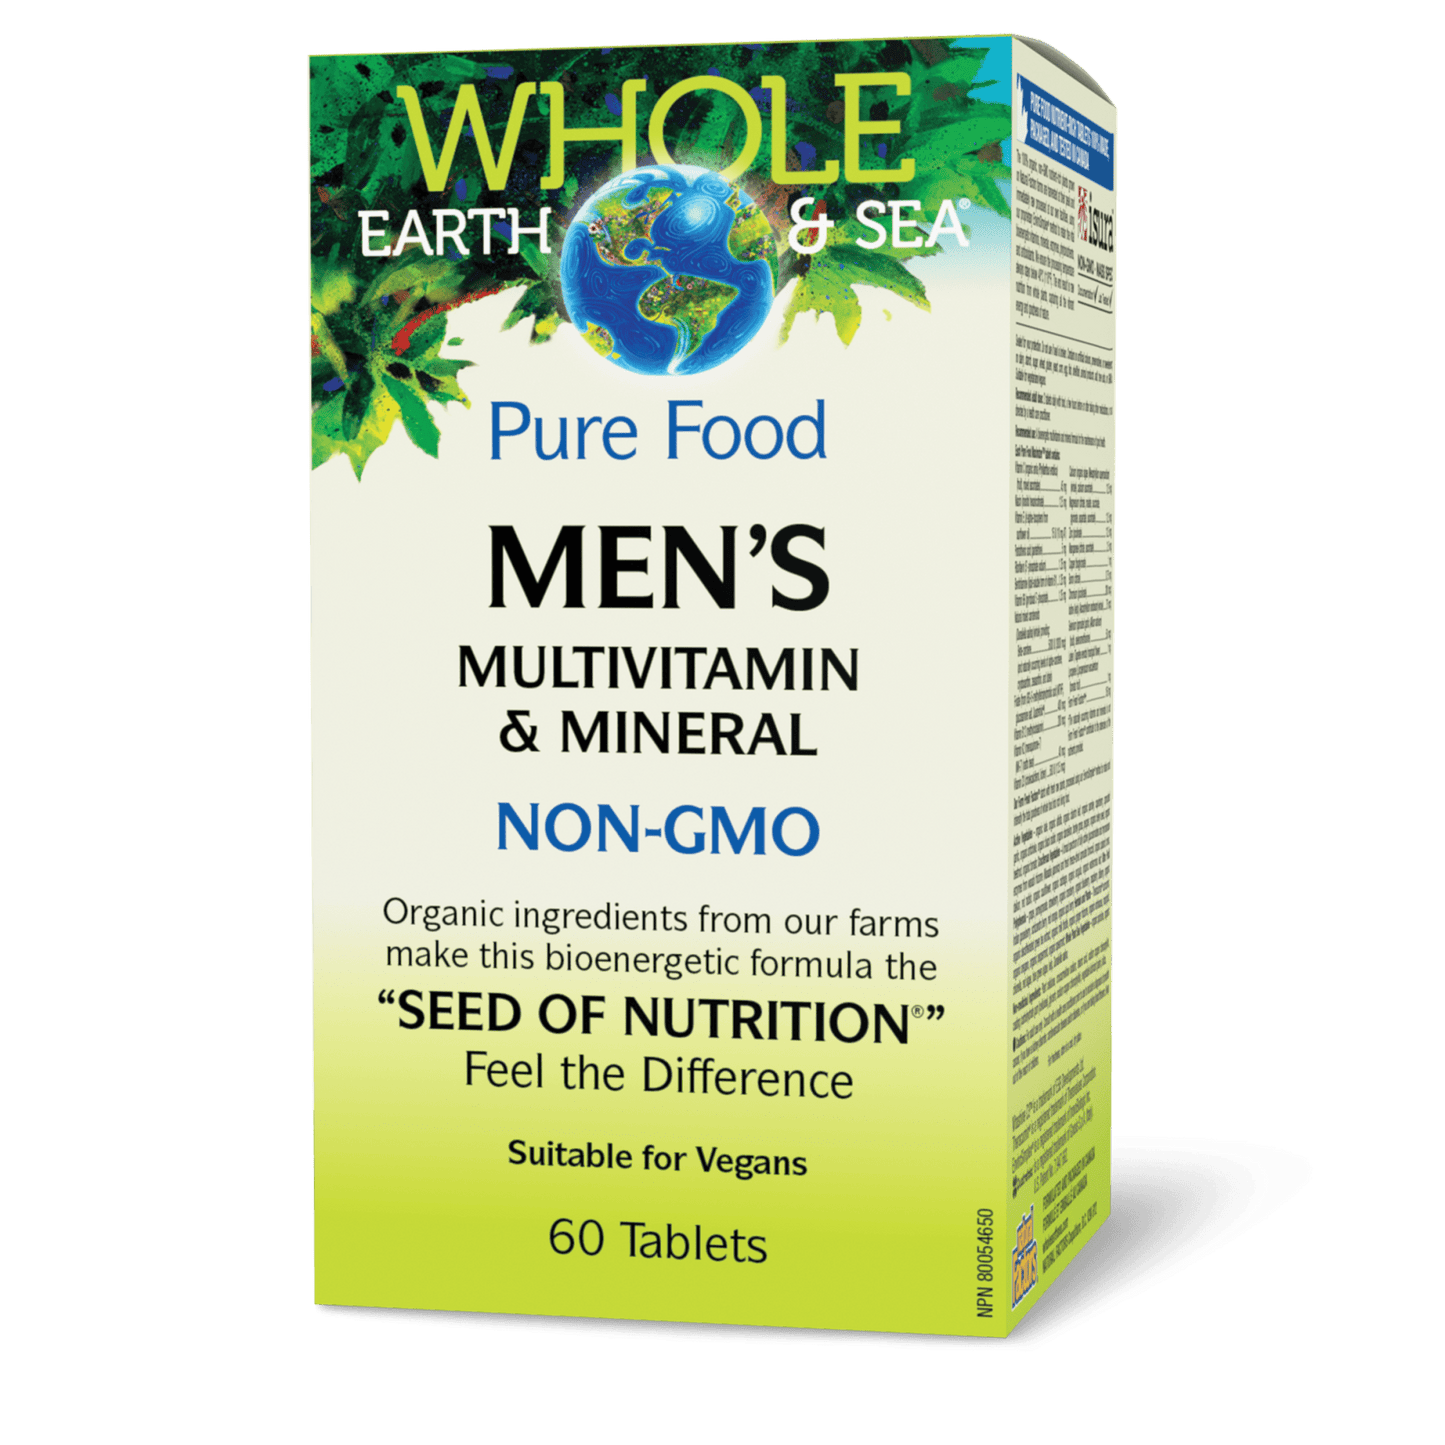 Men’s Multivitamin & Mineral, Whole Earth & Sea, Whole Earth & Sea®|v|image|35504